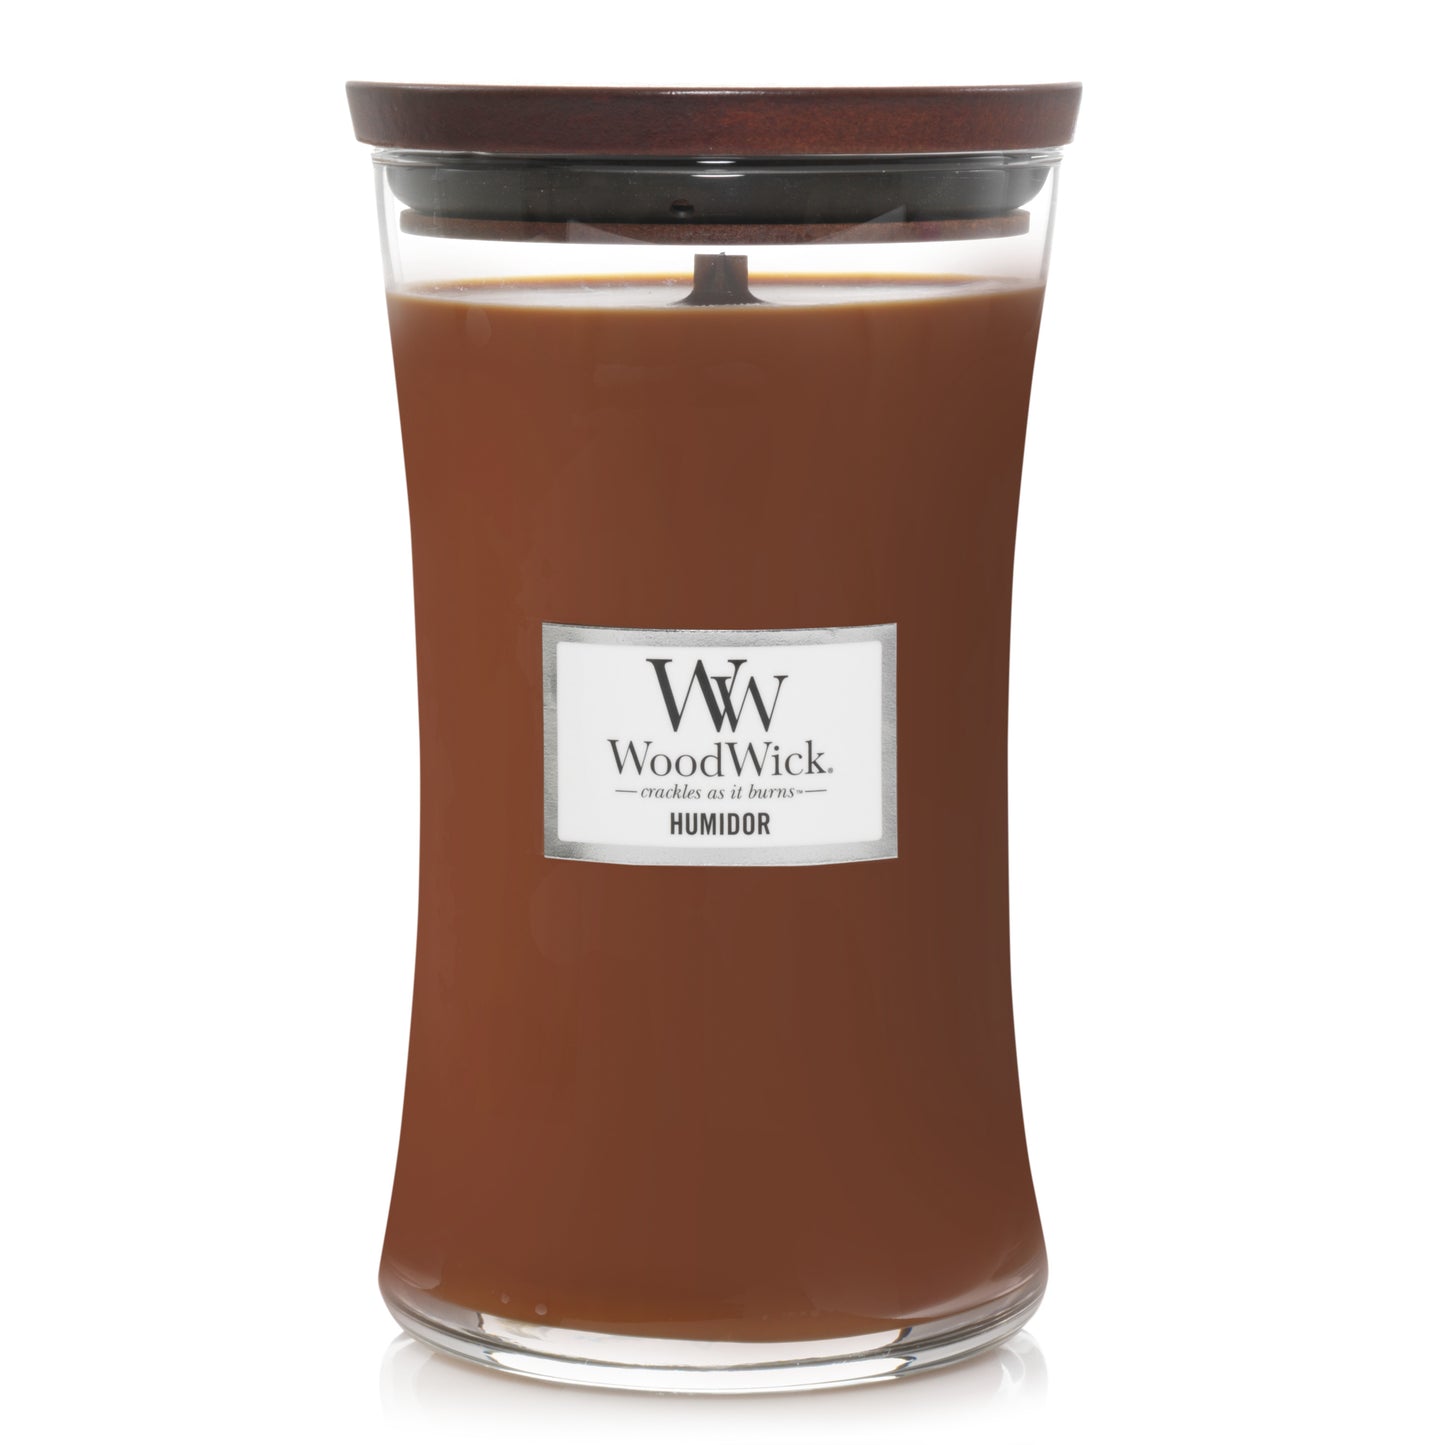 HUMIDOR - WoodWick 22oz Large Jar Candle Burns 180 Hours